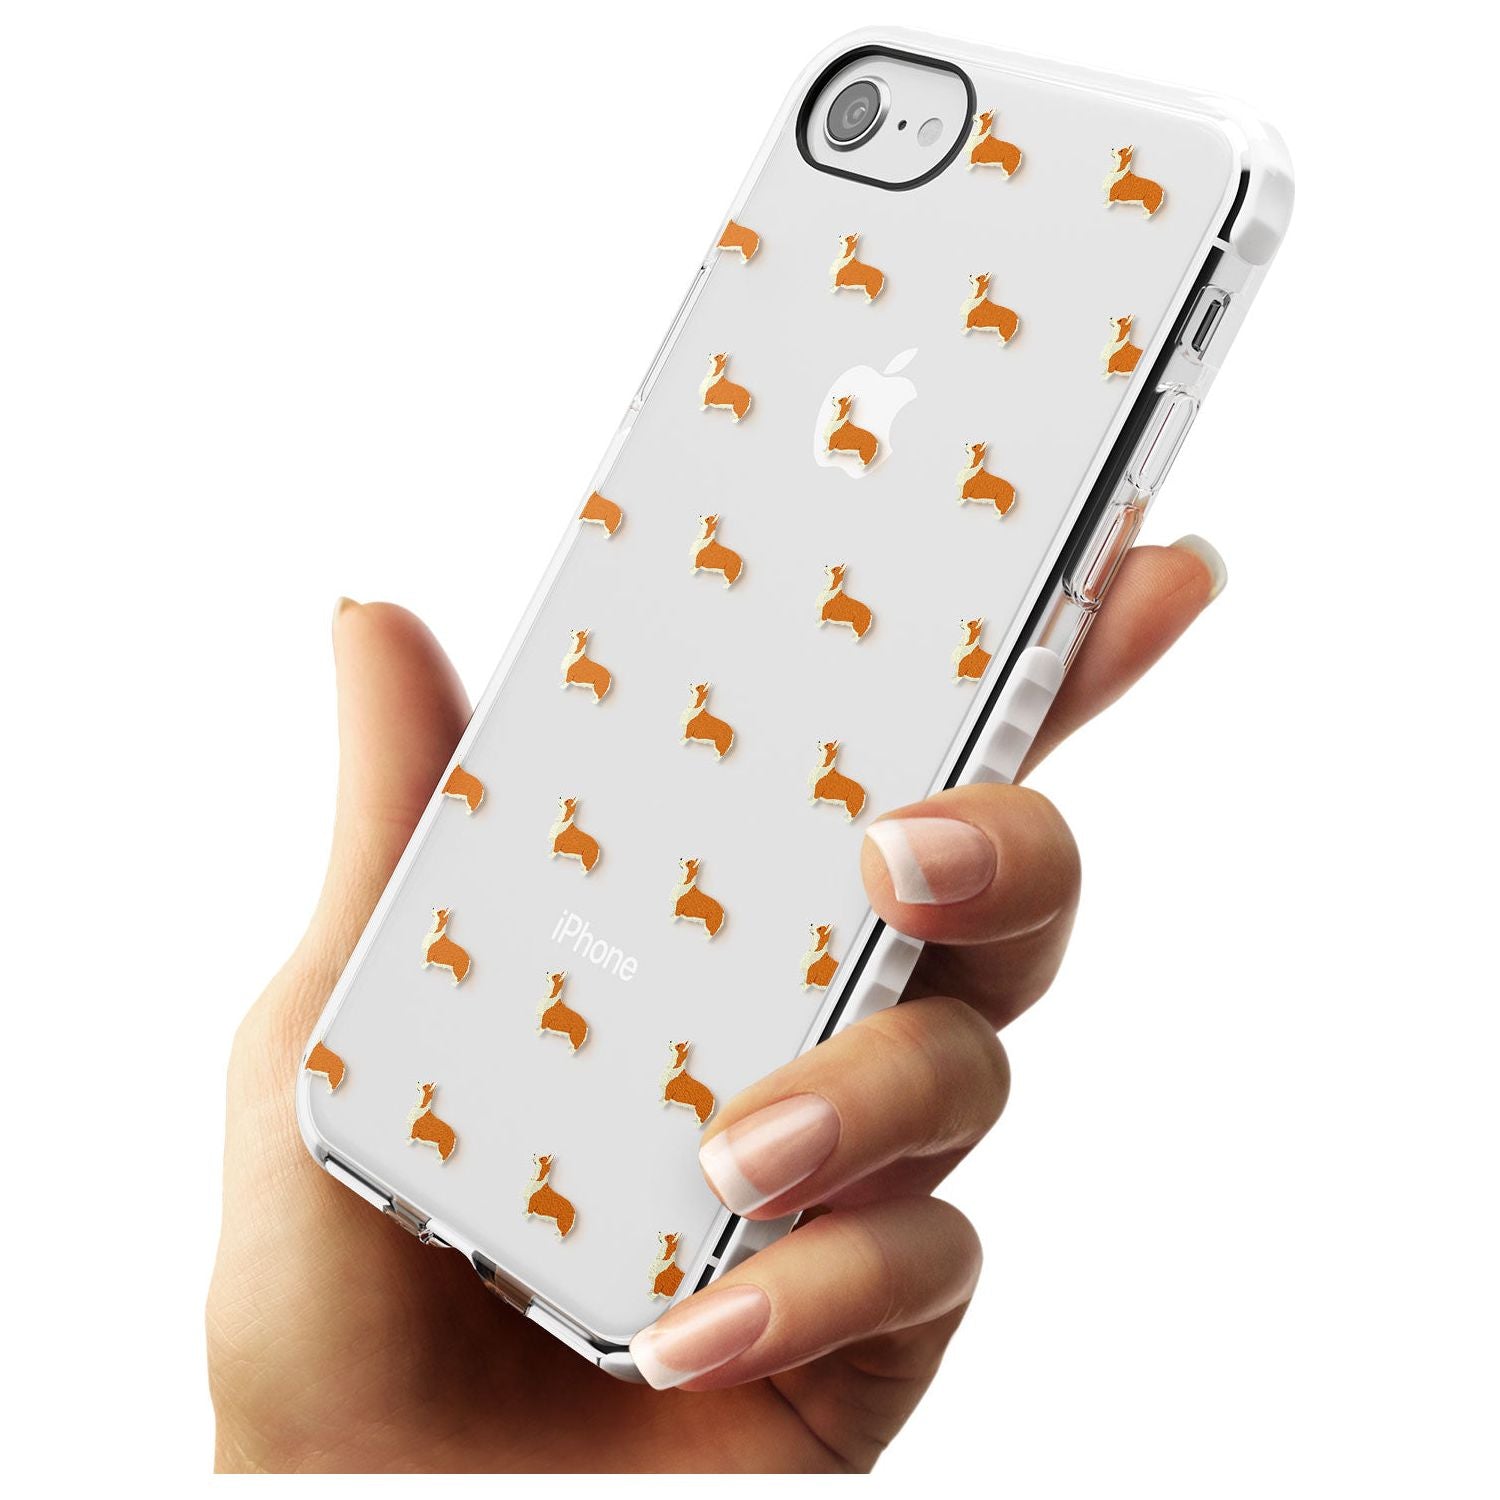 Pembroke Welsh Corgi Dog Pattern Clear Impact Phone Case for iPhone SE 8 7 Plus